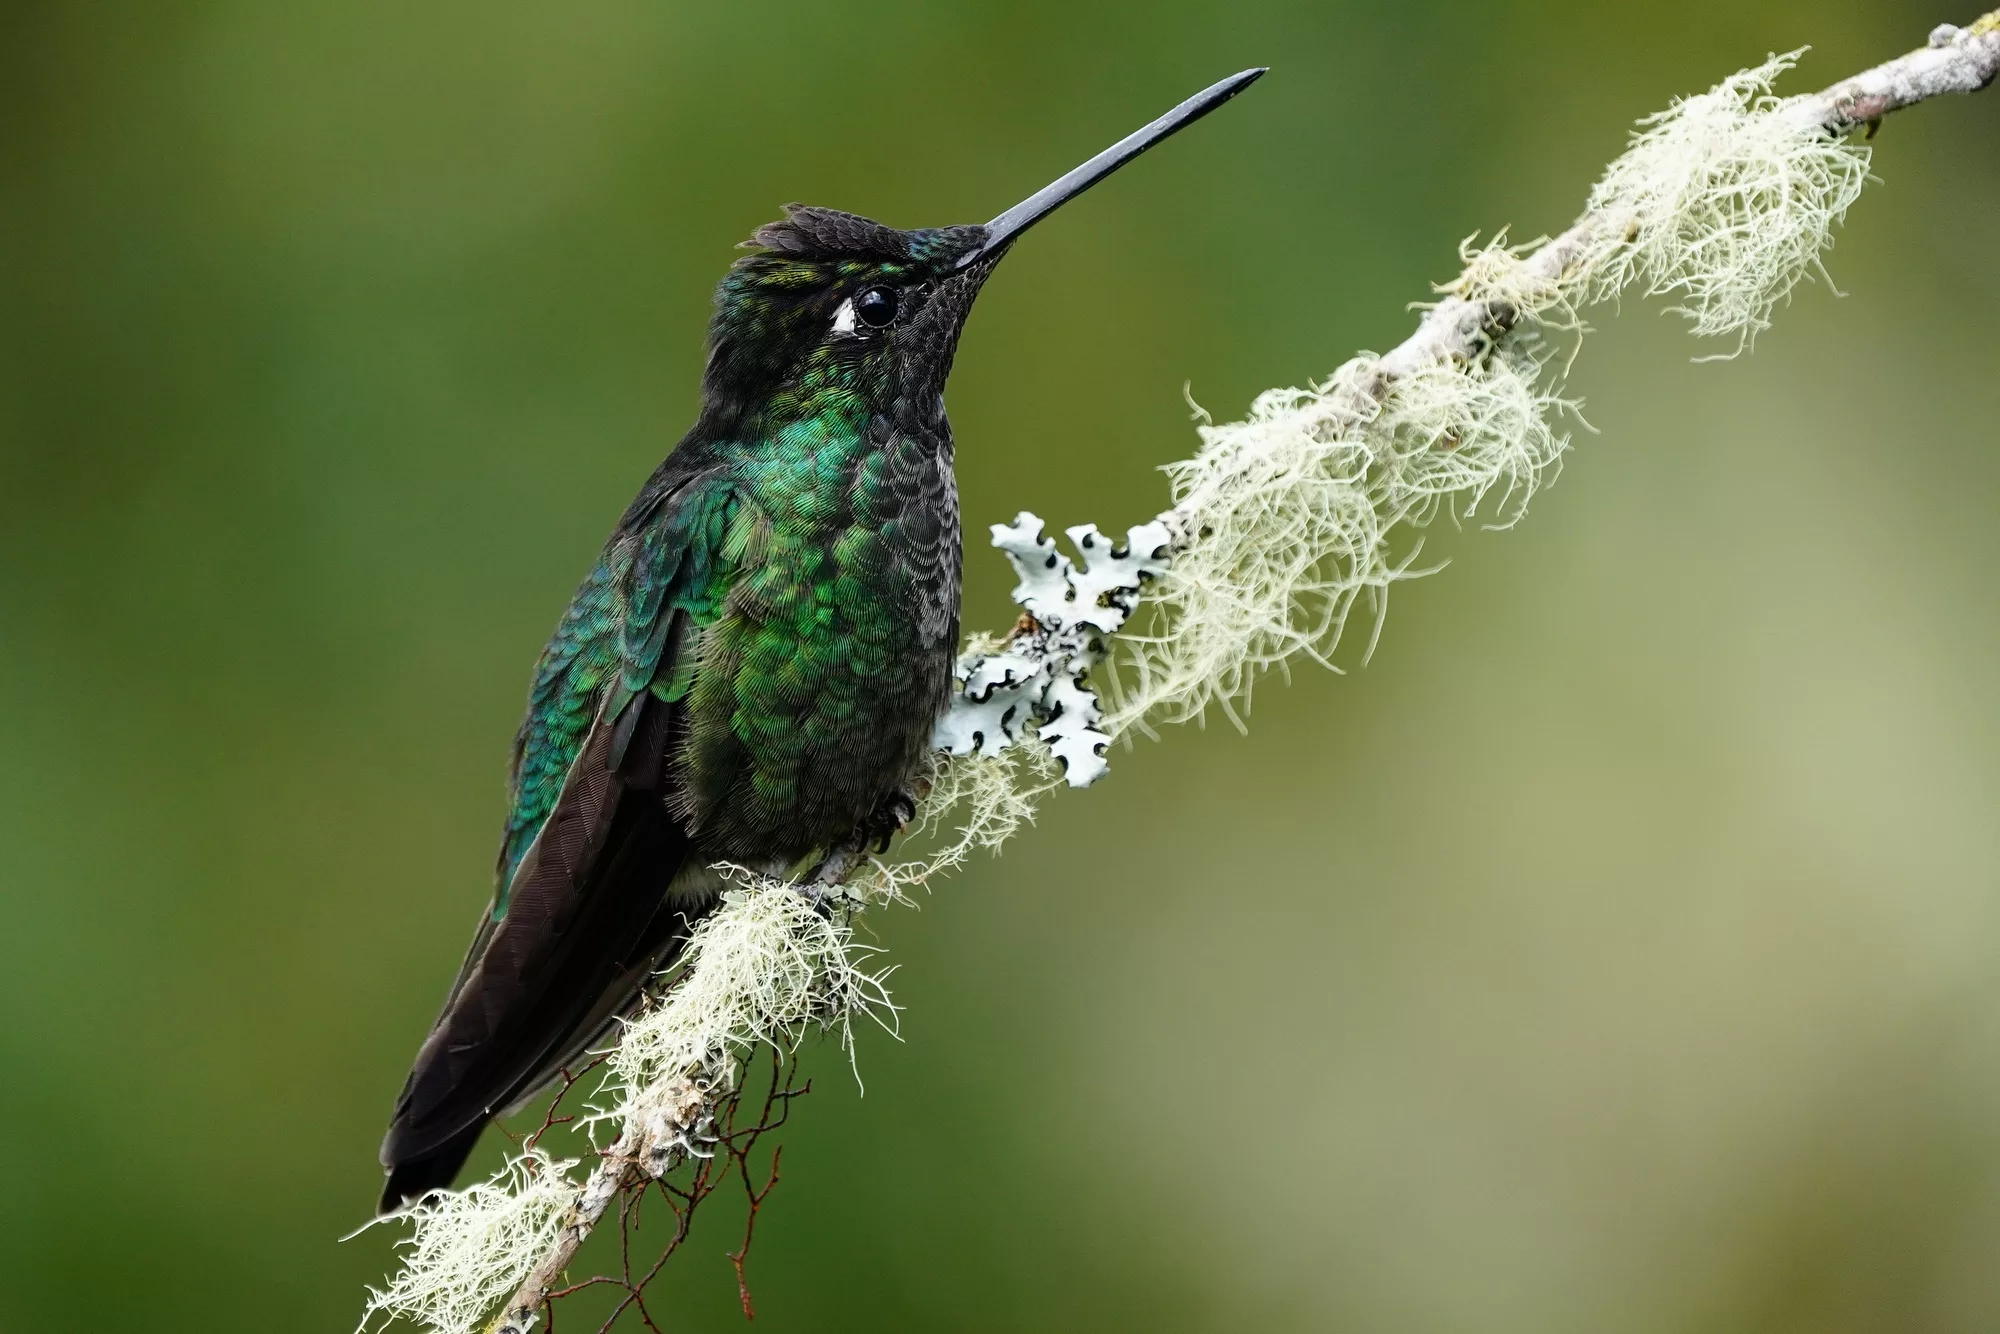 Costa Rica photo tour with Don Mammoser - hummingbird